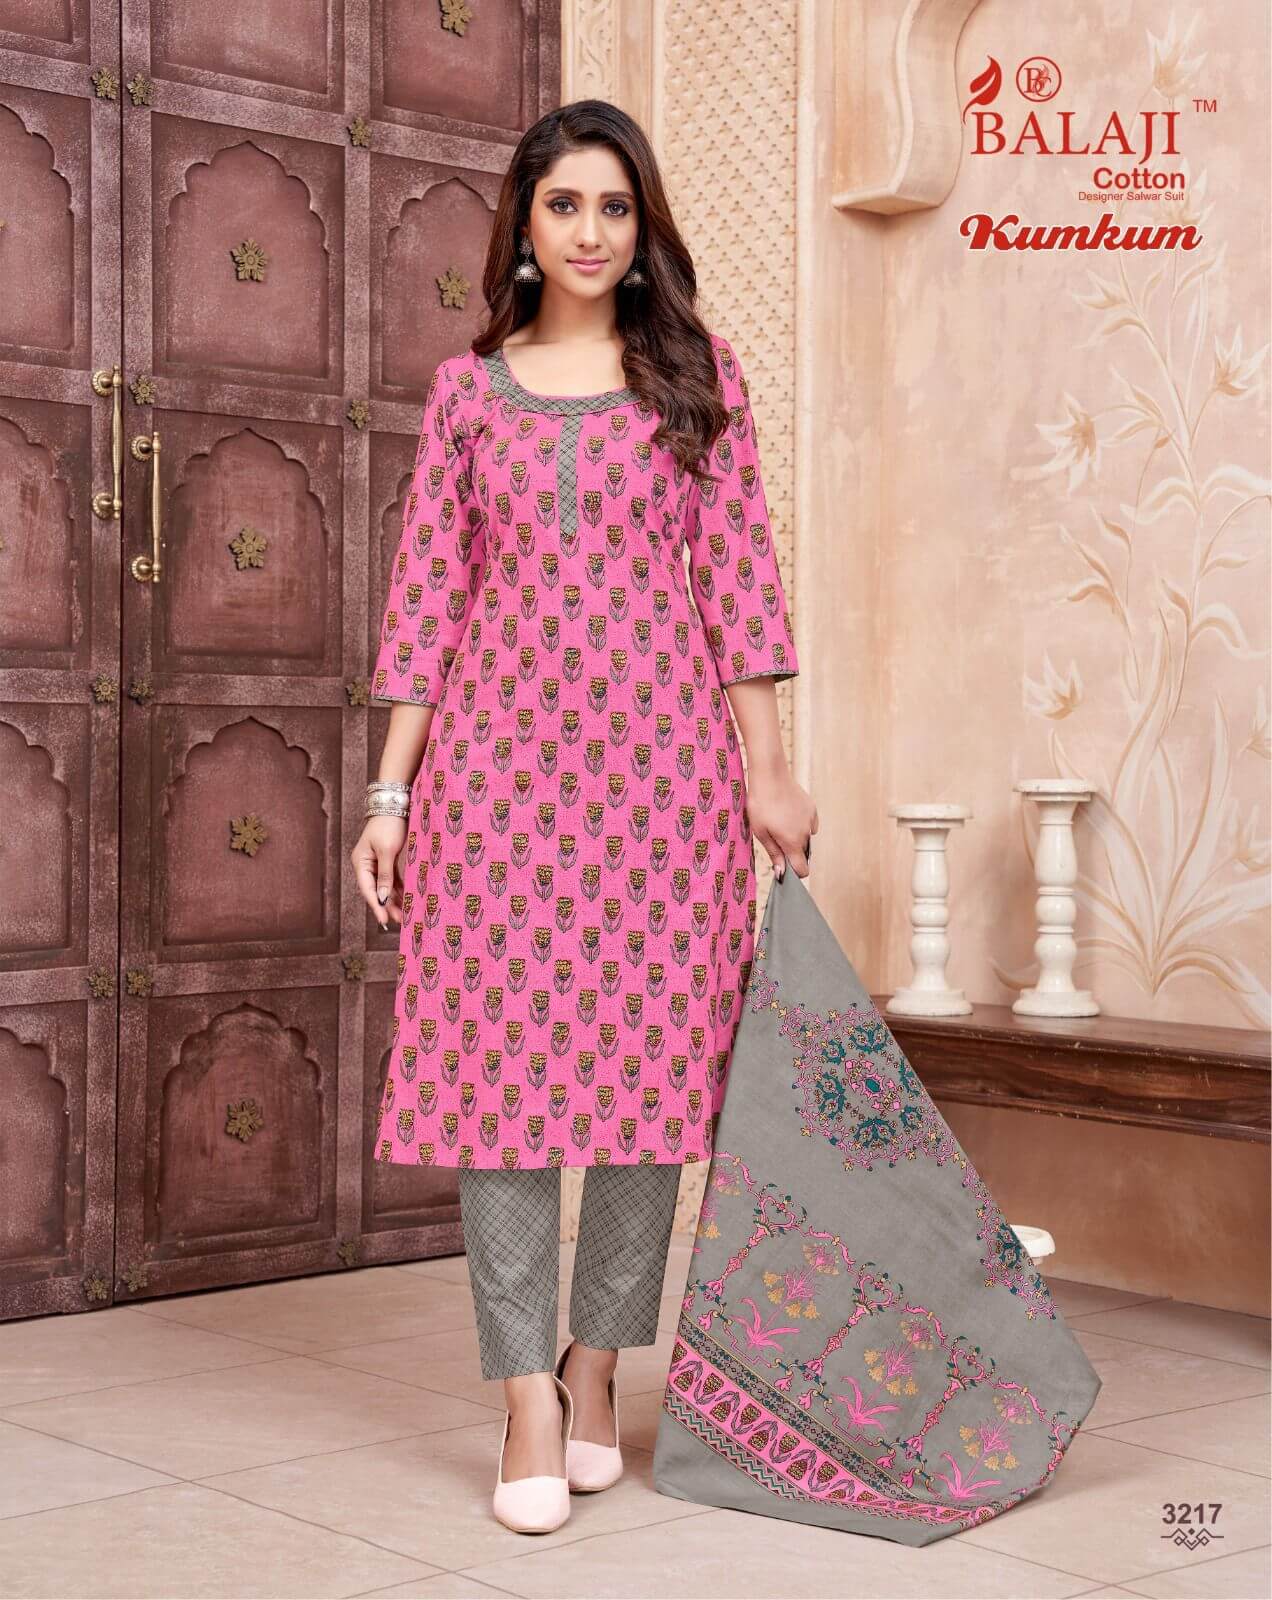 Balaji Cotton Kumkum Vol 32 B Readymade Dress collection 10